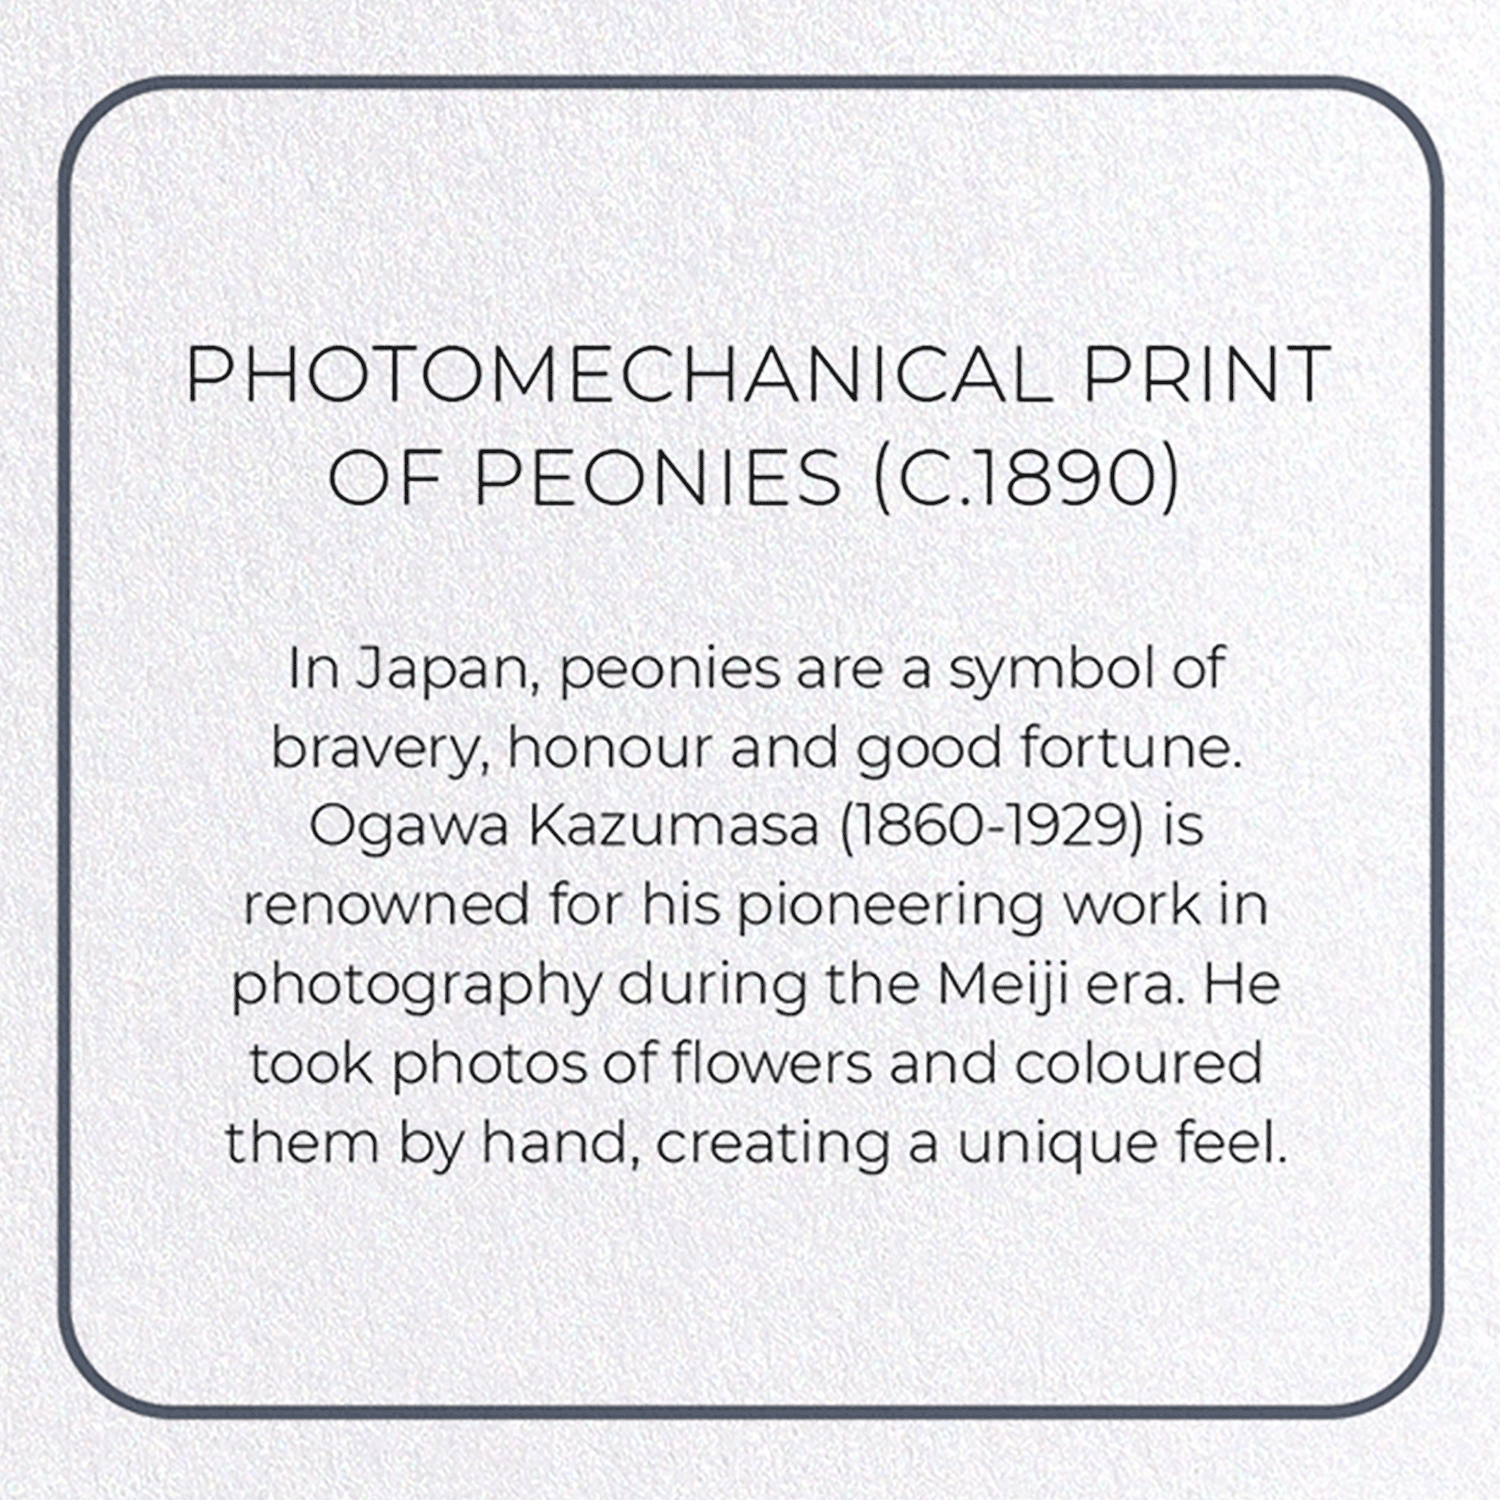 PHOTOMECHANICAL PRINT OF PEONIES (C.1890)